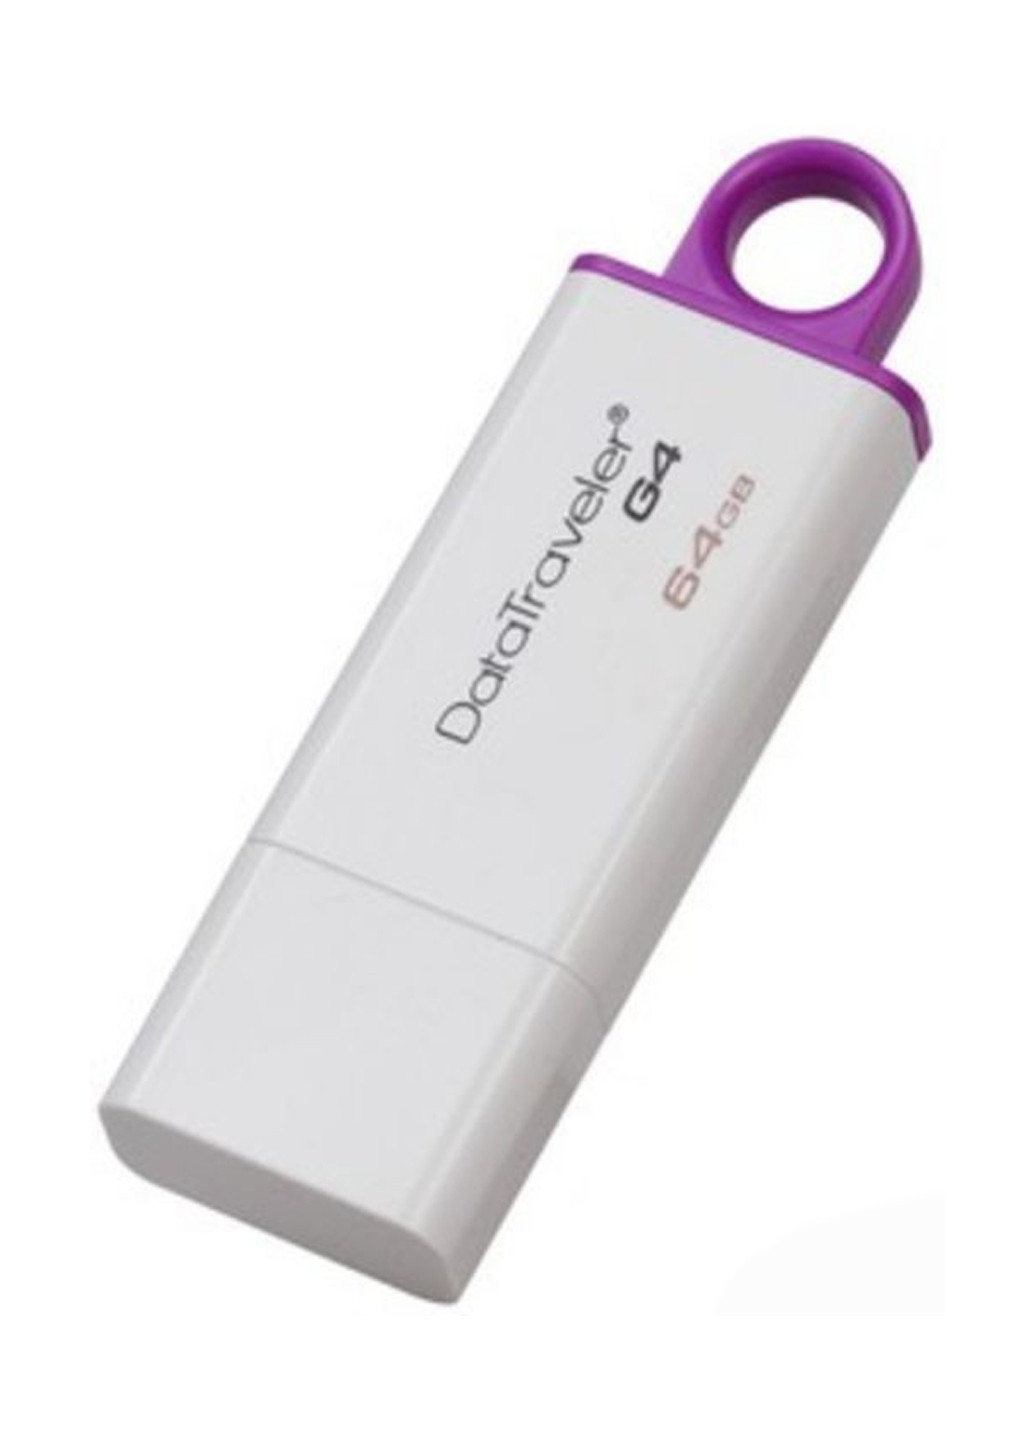 Флеш пам'ять USB DataTraveler I G4 64GB (DTIG4 / 64GB) Kingston флеш память usb kingston datatraveler i g4 64gb (dtig4/64gb) (136742770)